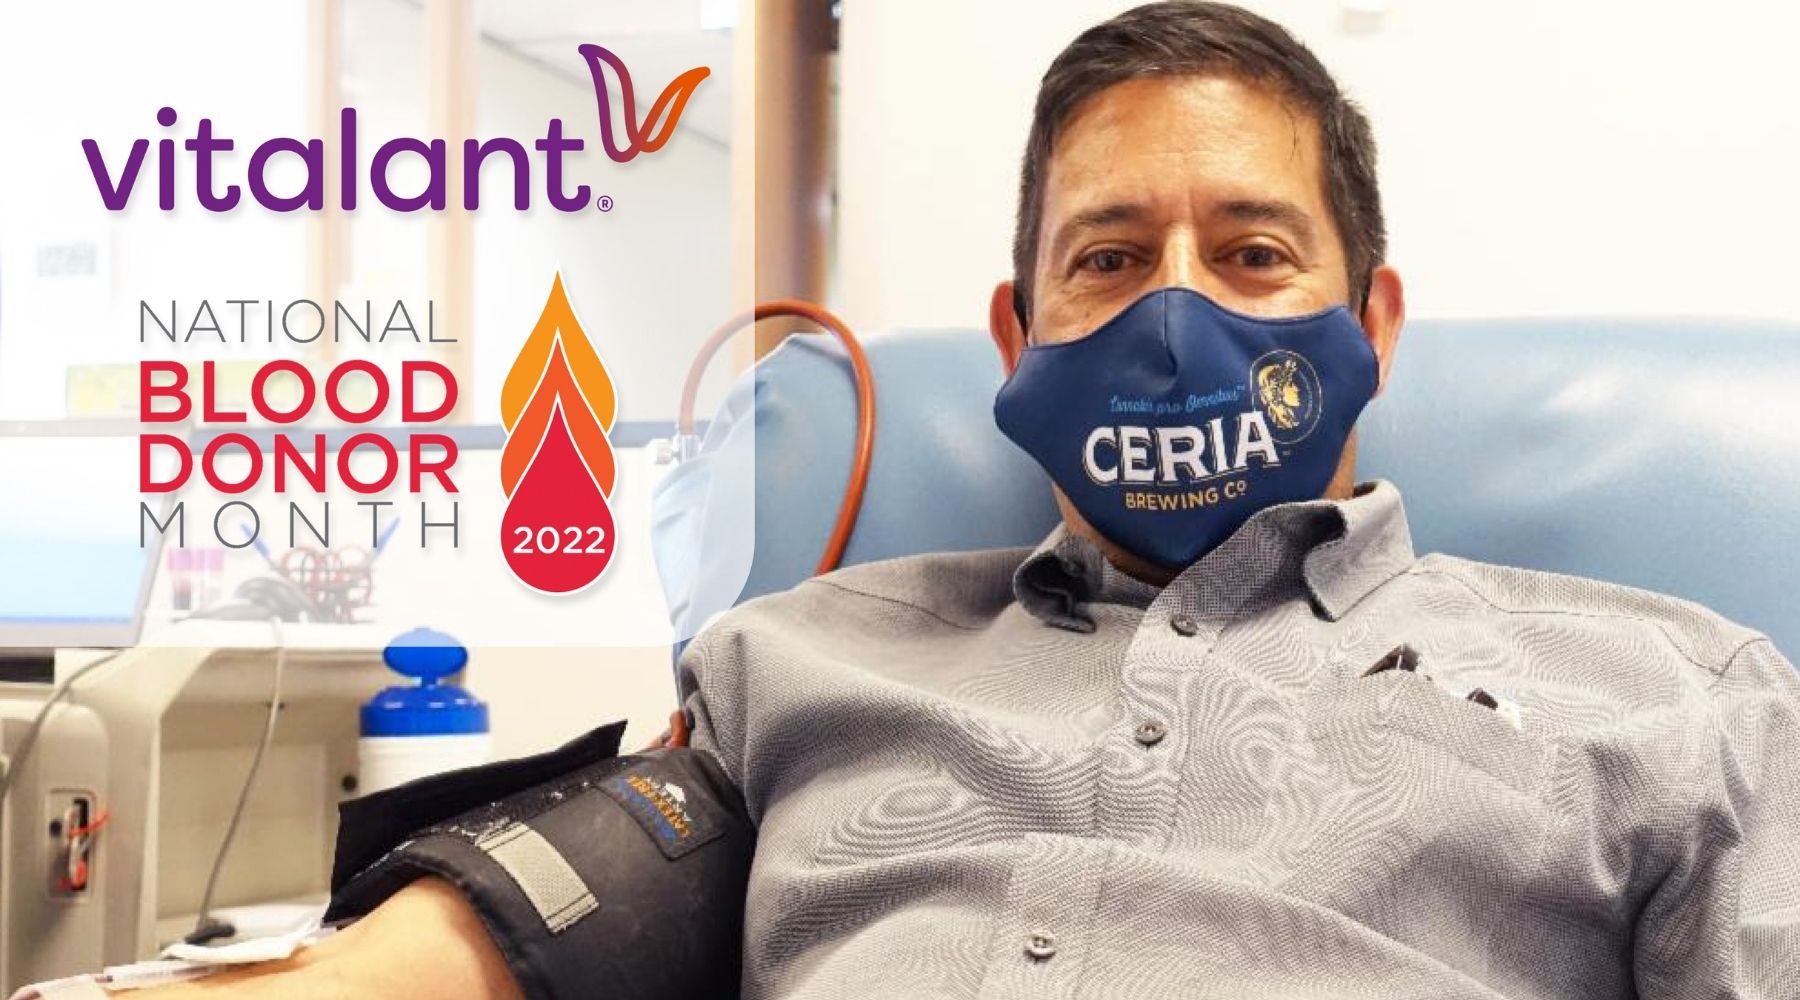 CERIA Brewing Rewards Coloradans for Helping Save Lives